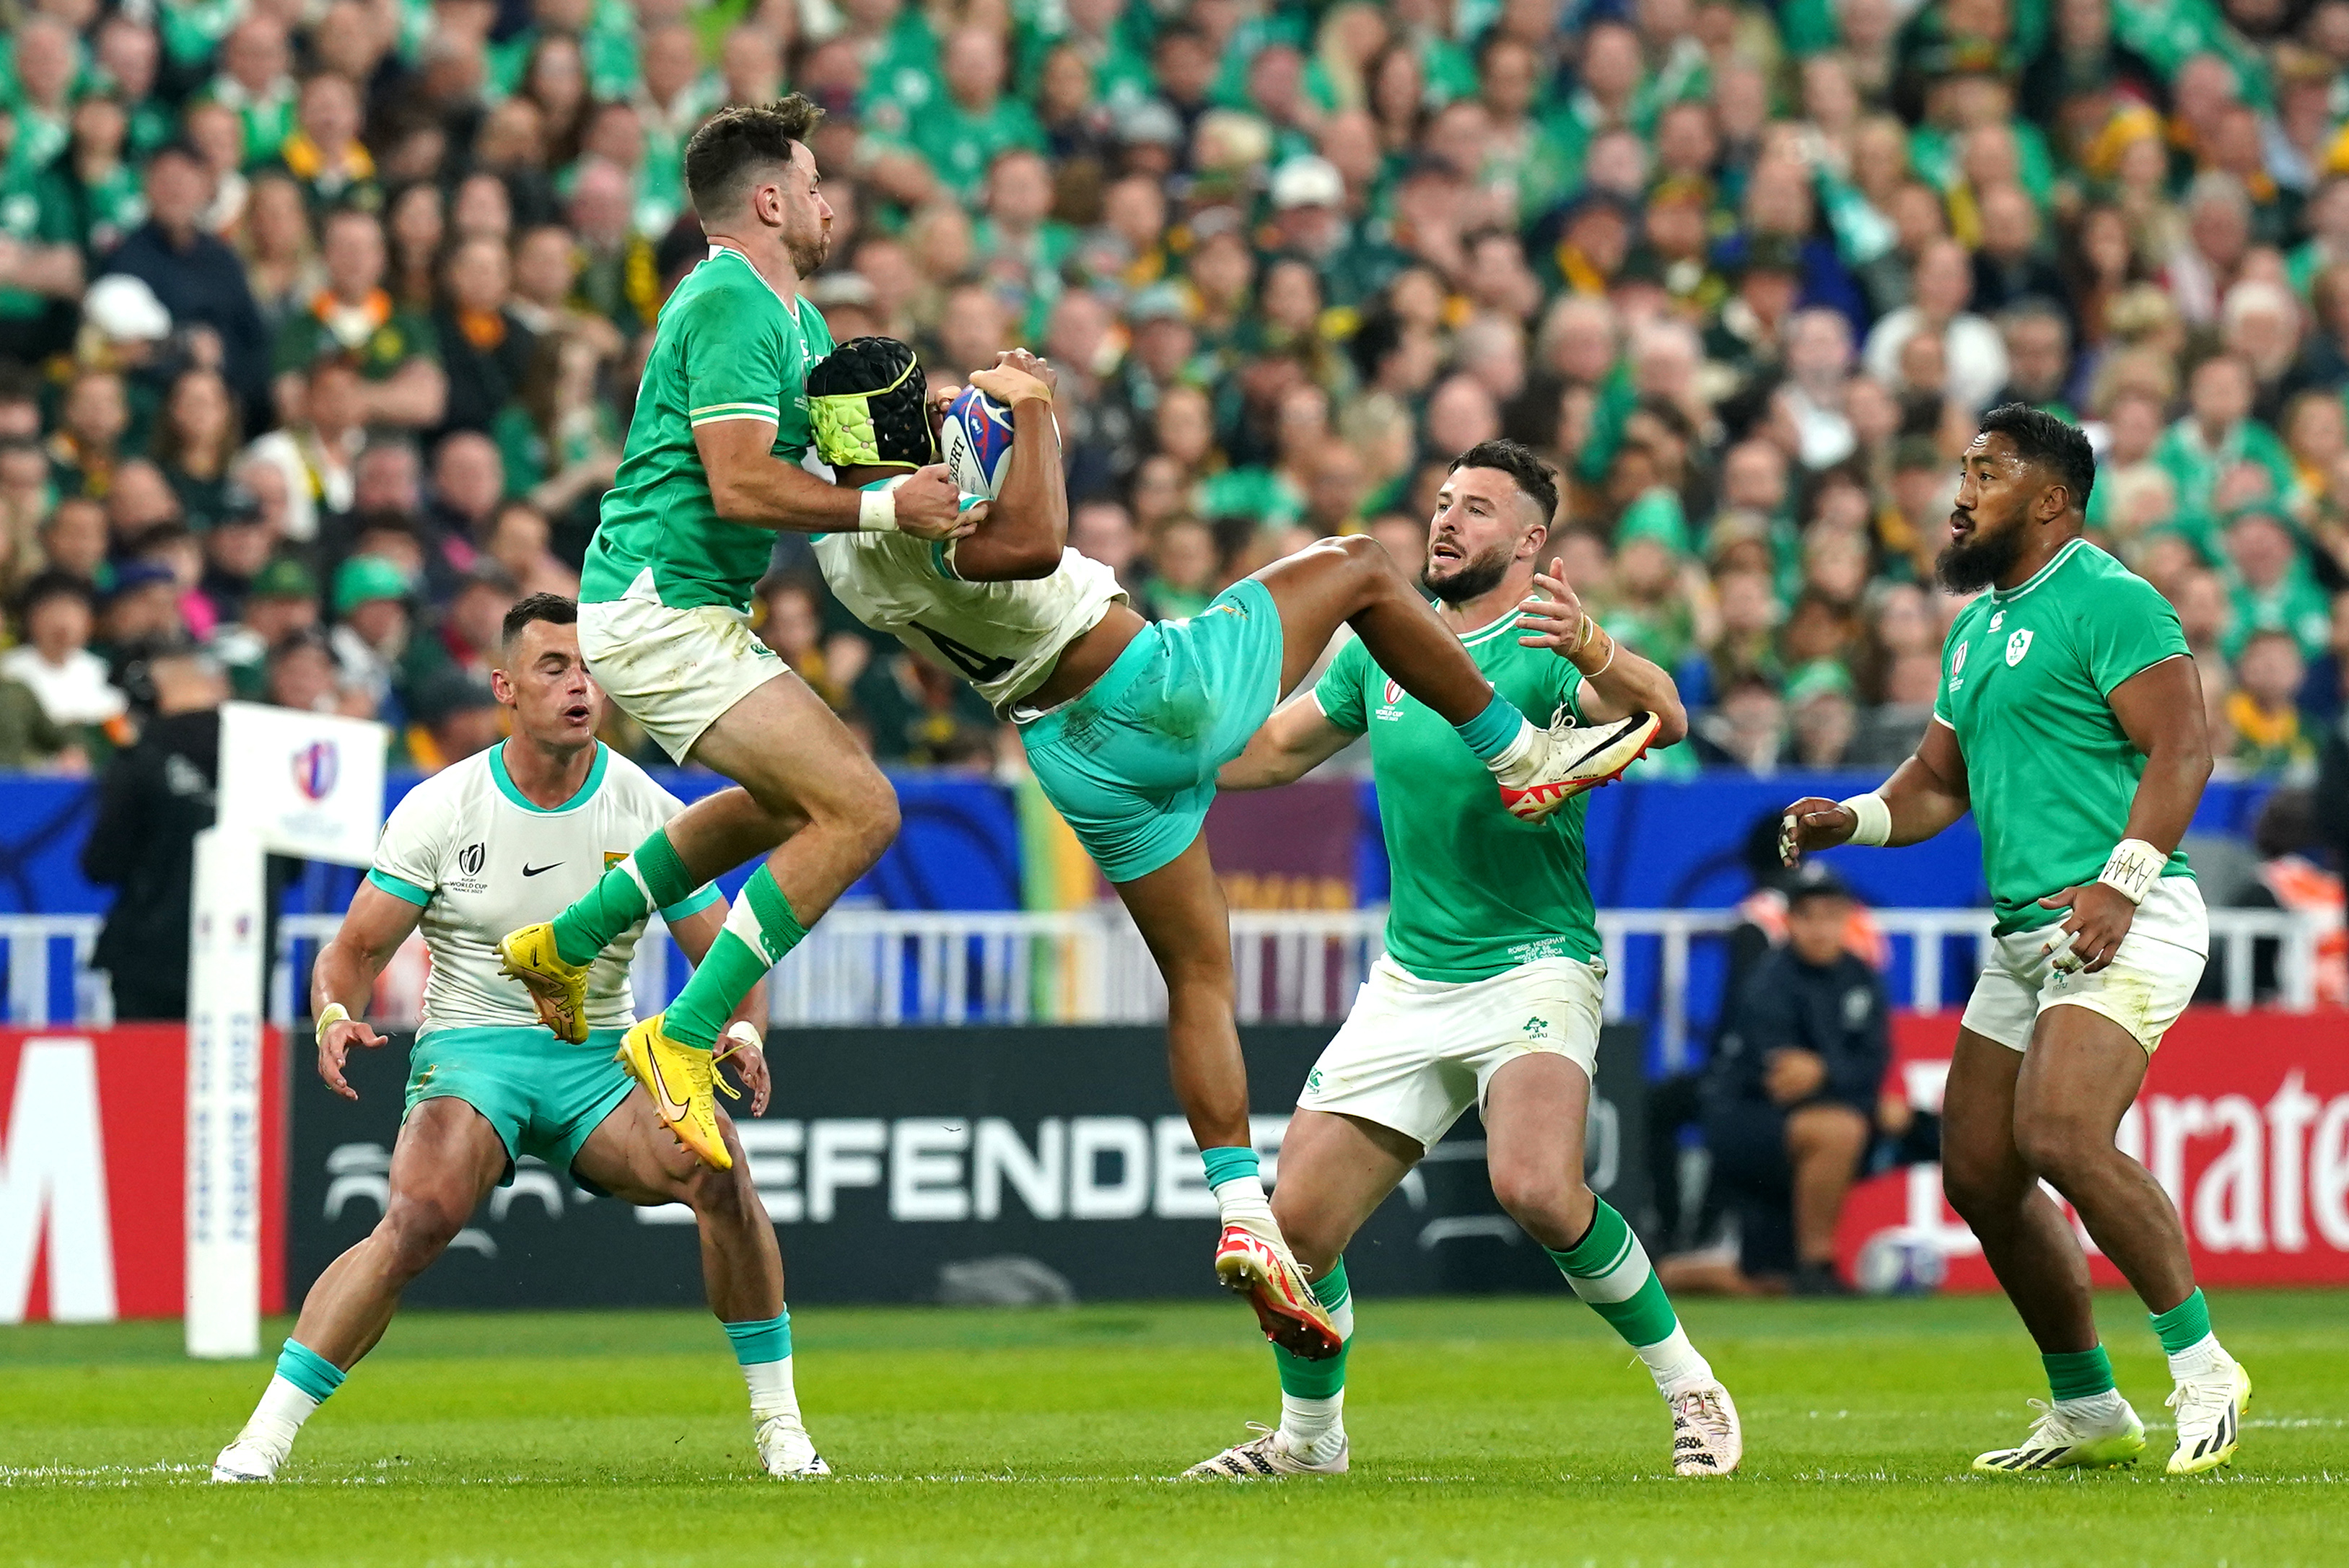 Hugo Keenan, left, felt nervous ahead of Ireland's clash with South Africa